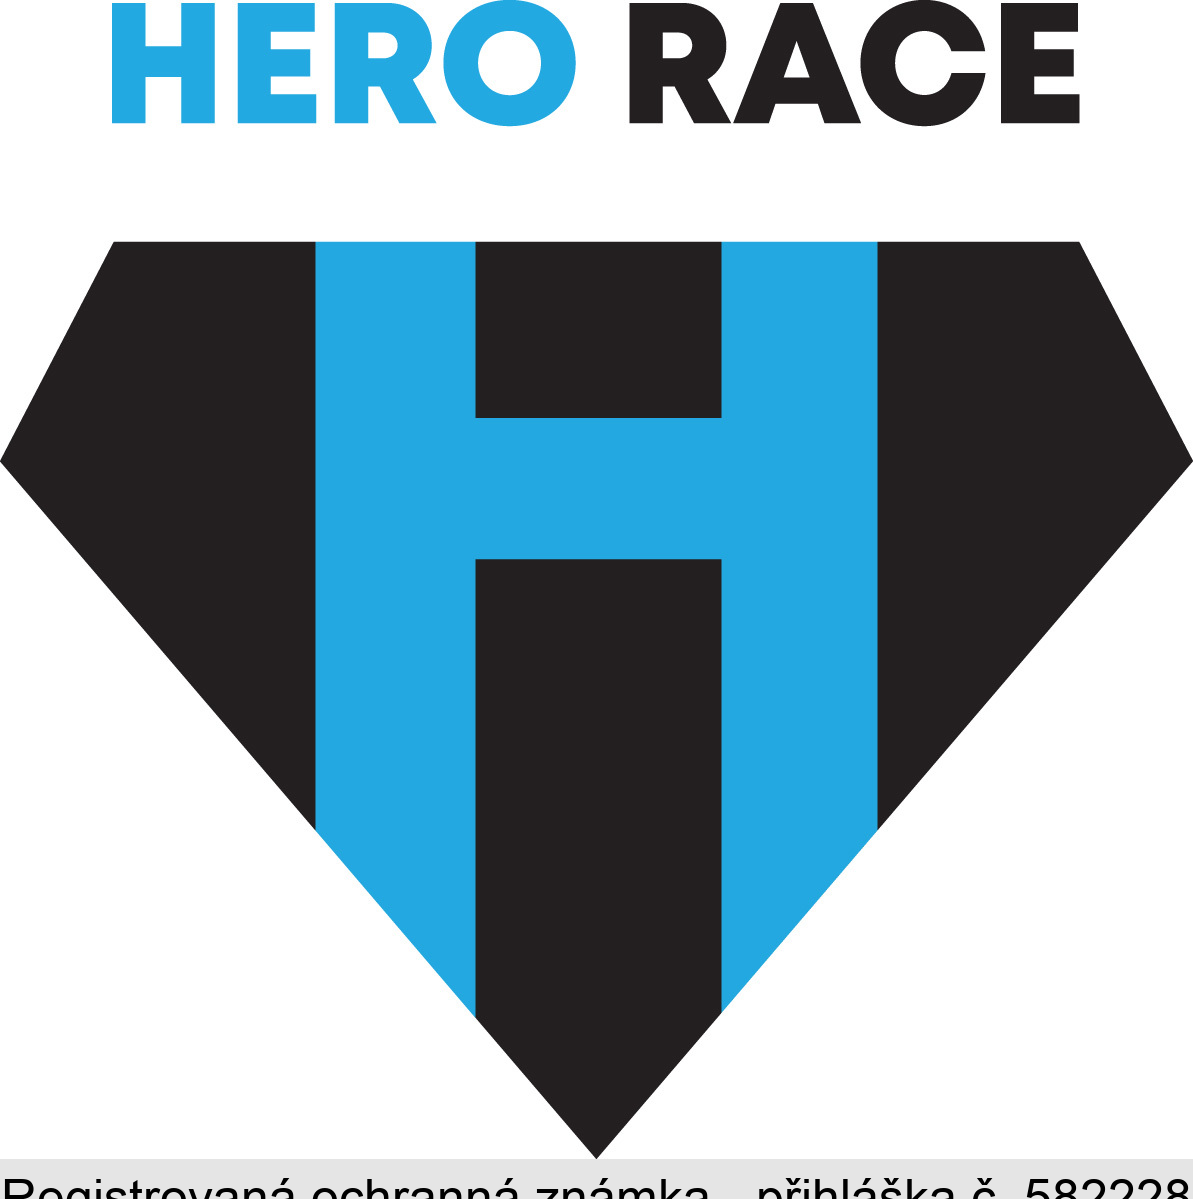 HERO RACE